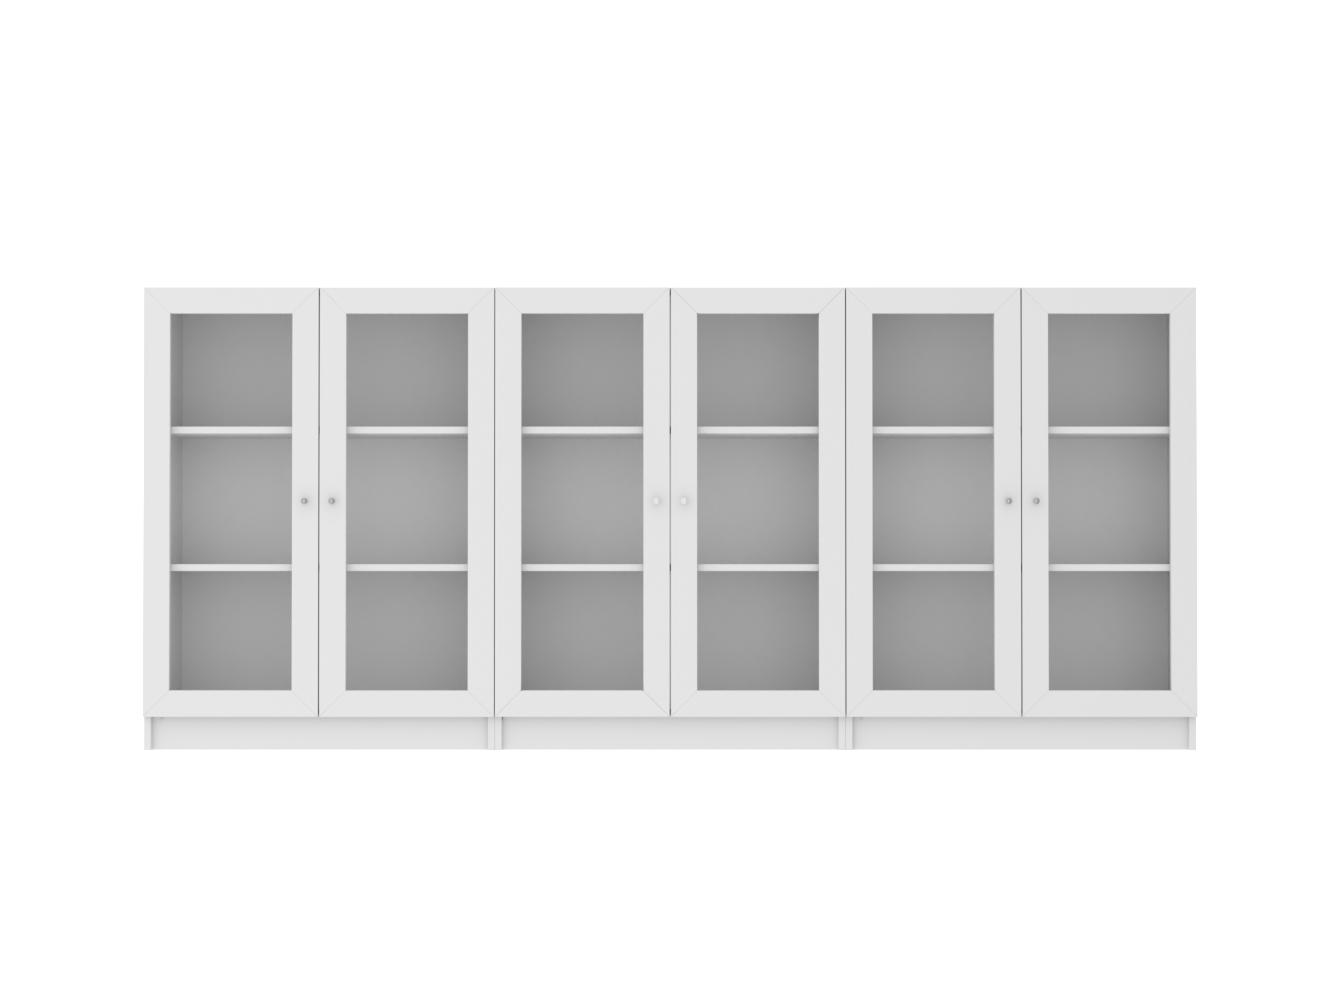  Книжный шкаф Билли 327 white ИКЕА (IKEA) изображение товара